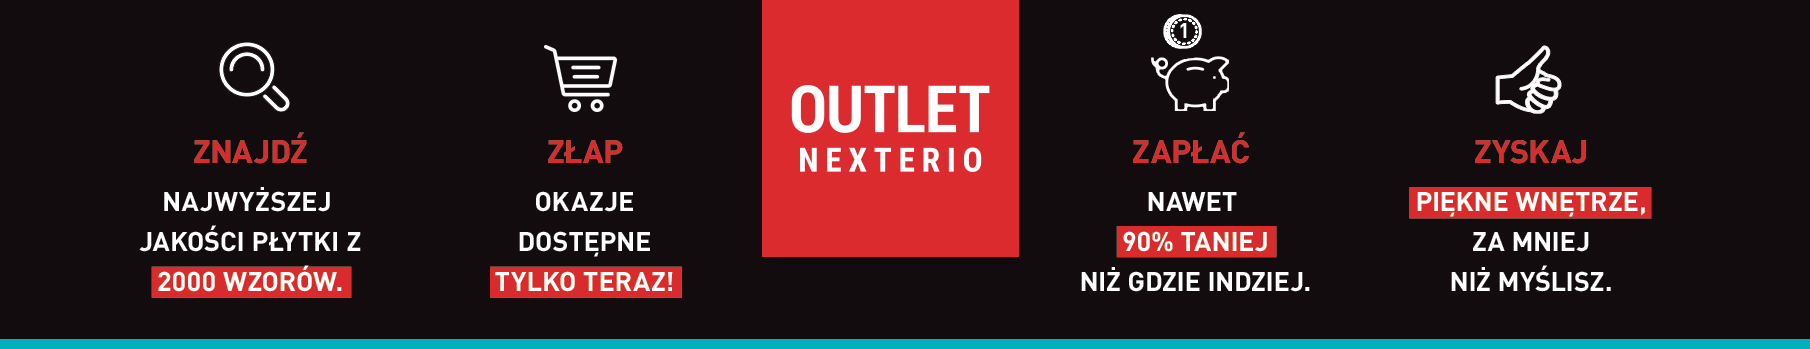 Outlet Nexterio Gliwice